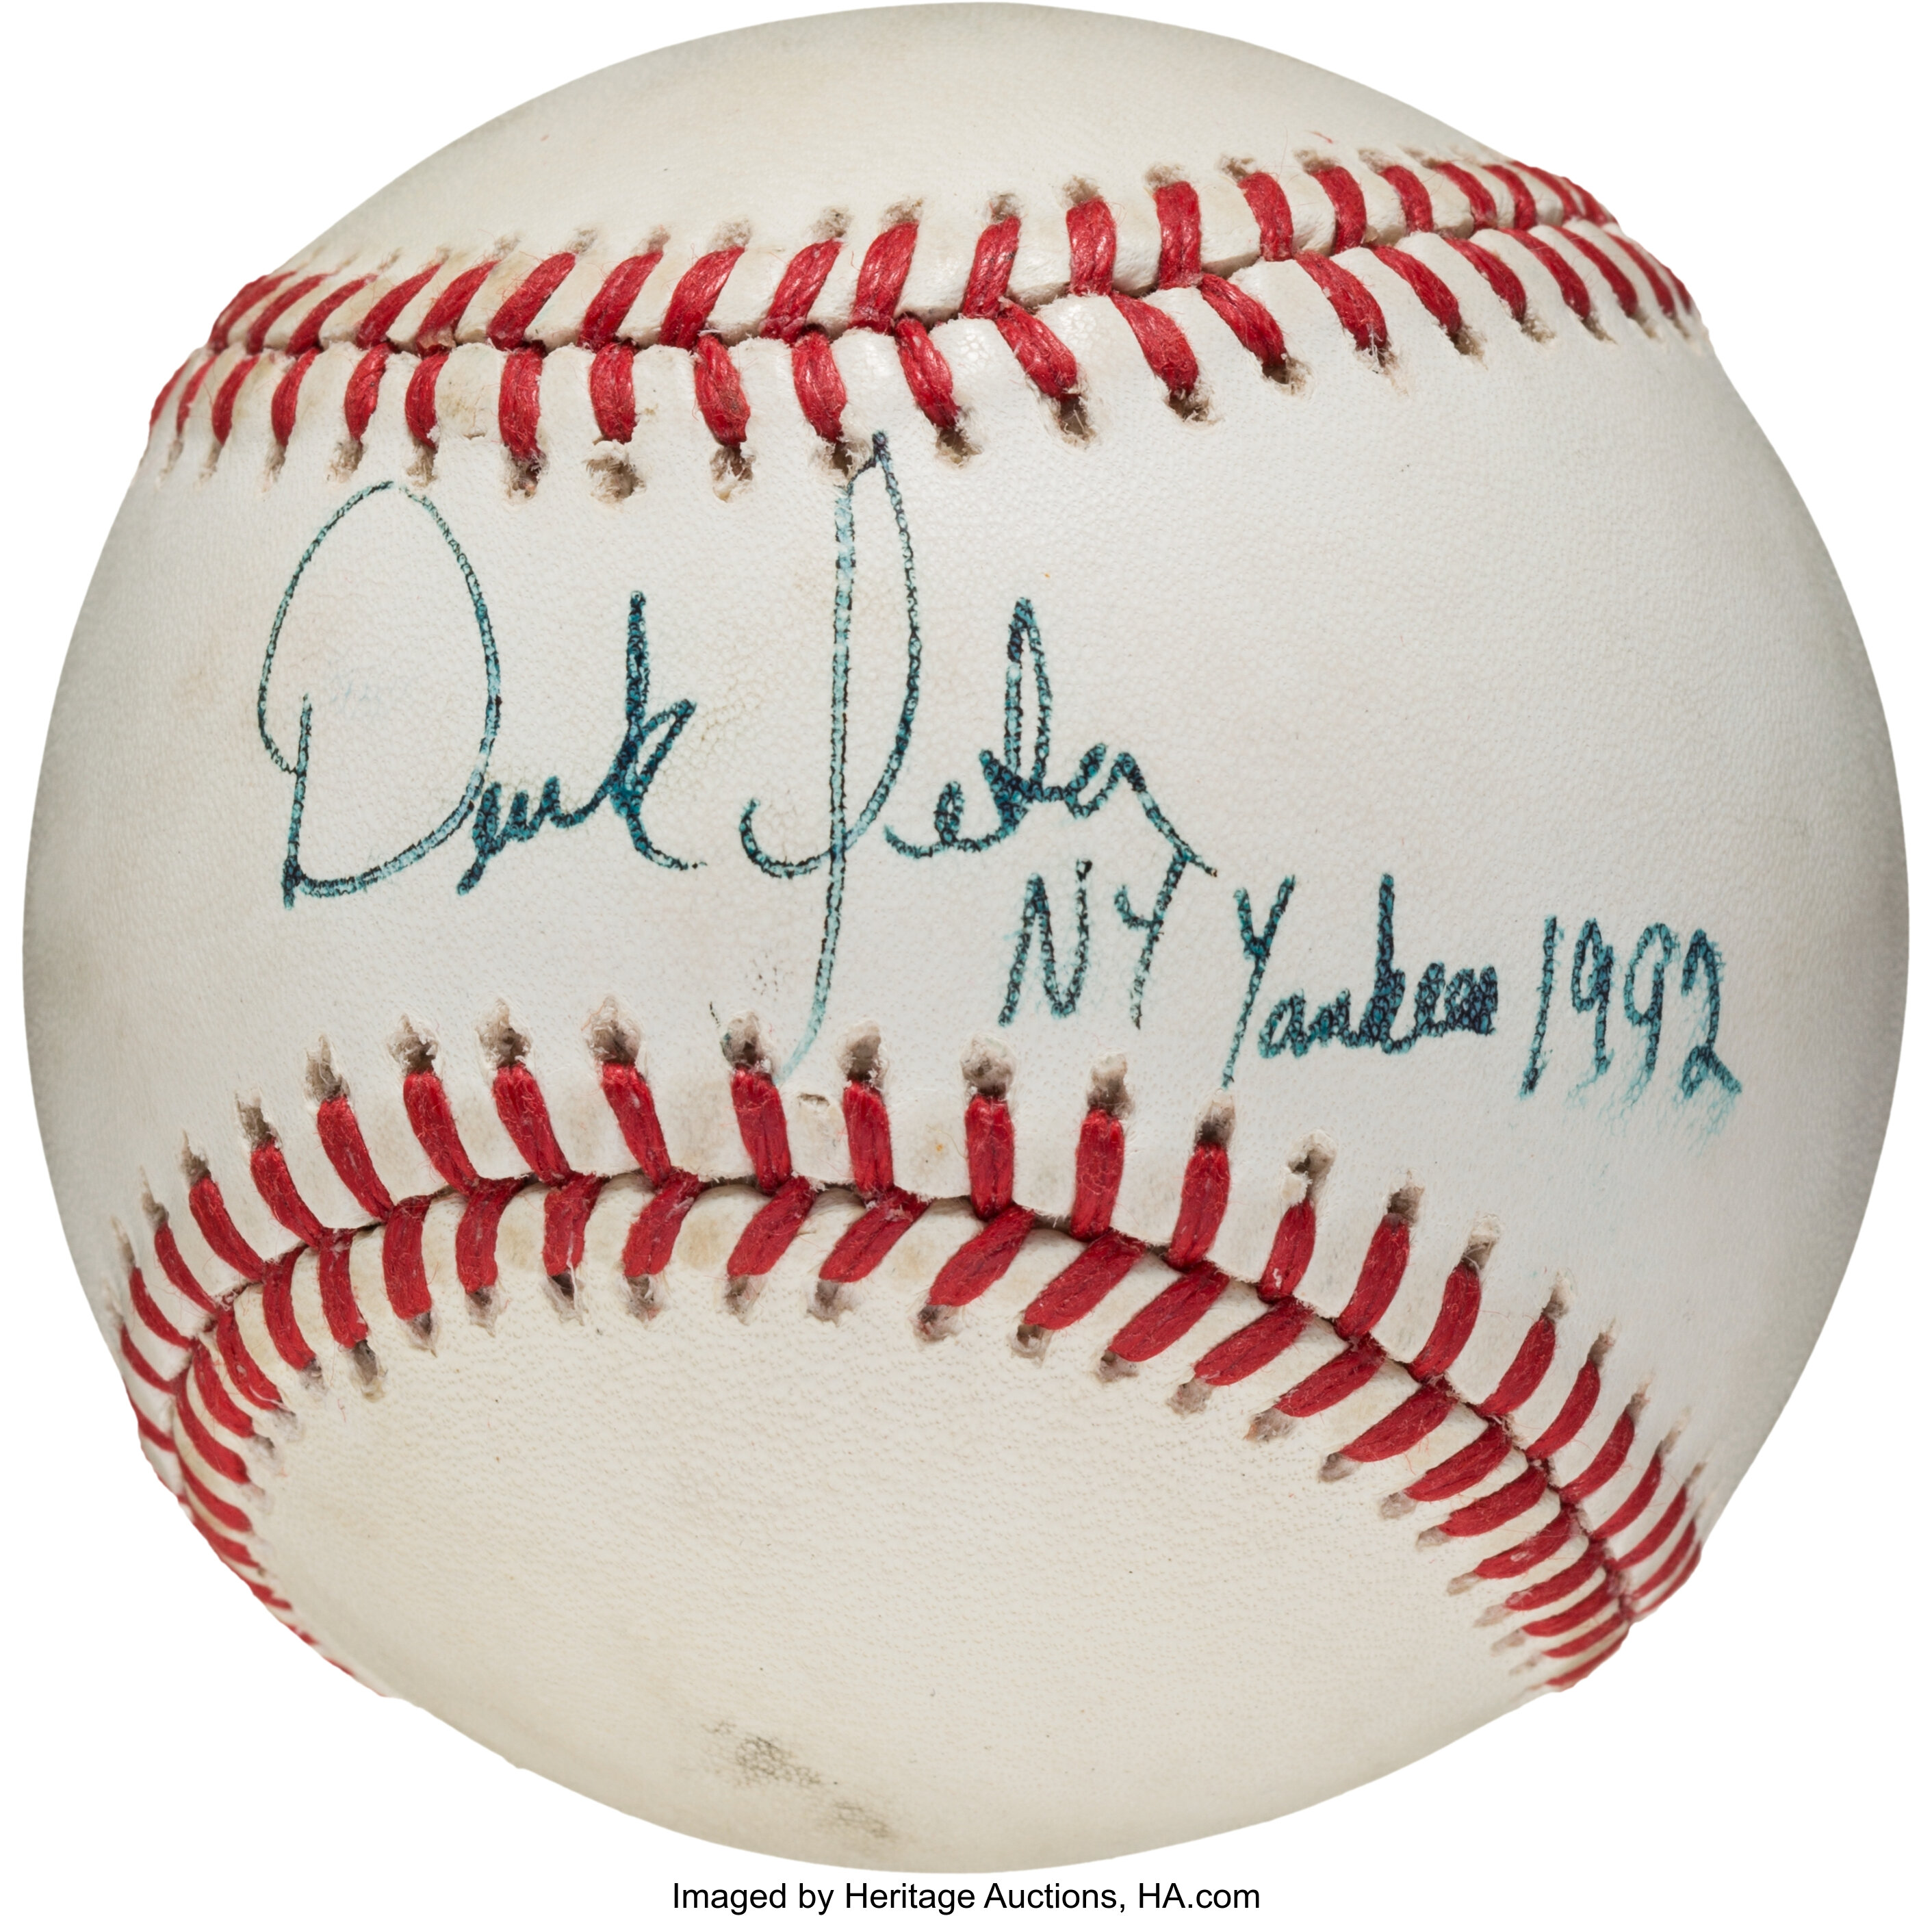 Core Four Signed Baseball Photo NY Yankees Derek Jeter Autograph